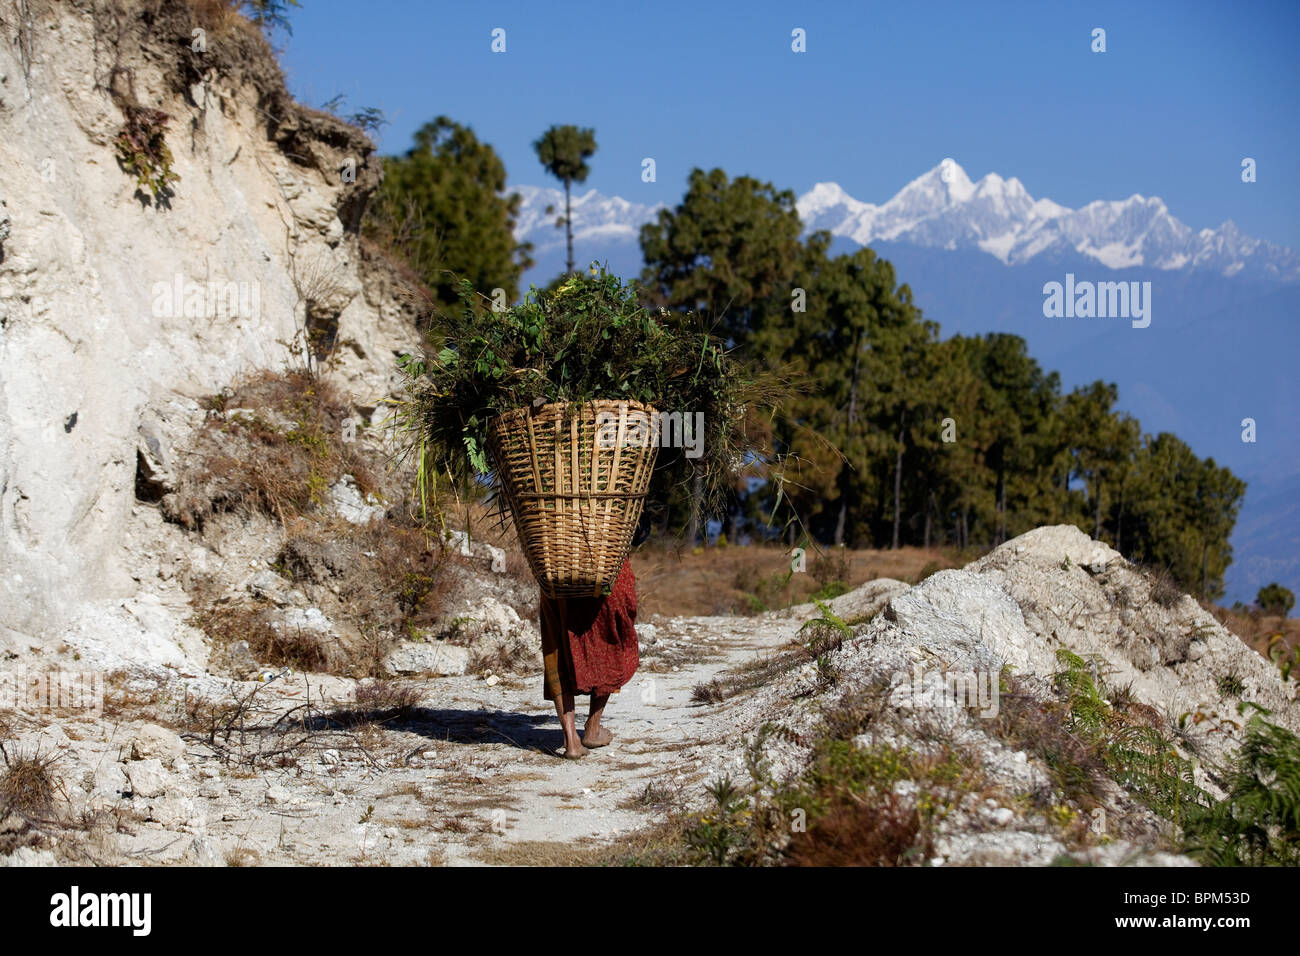 Woman carrying basket on mountain trail Nagarkot Nepal, the Himalayas Asia Stock Photo